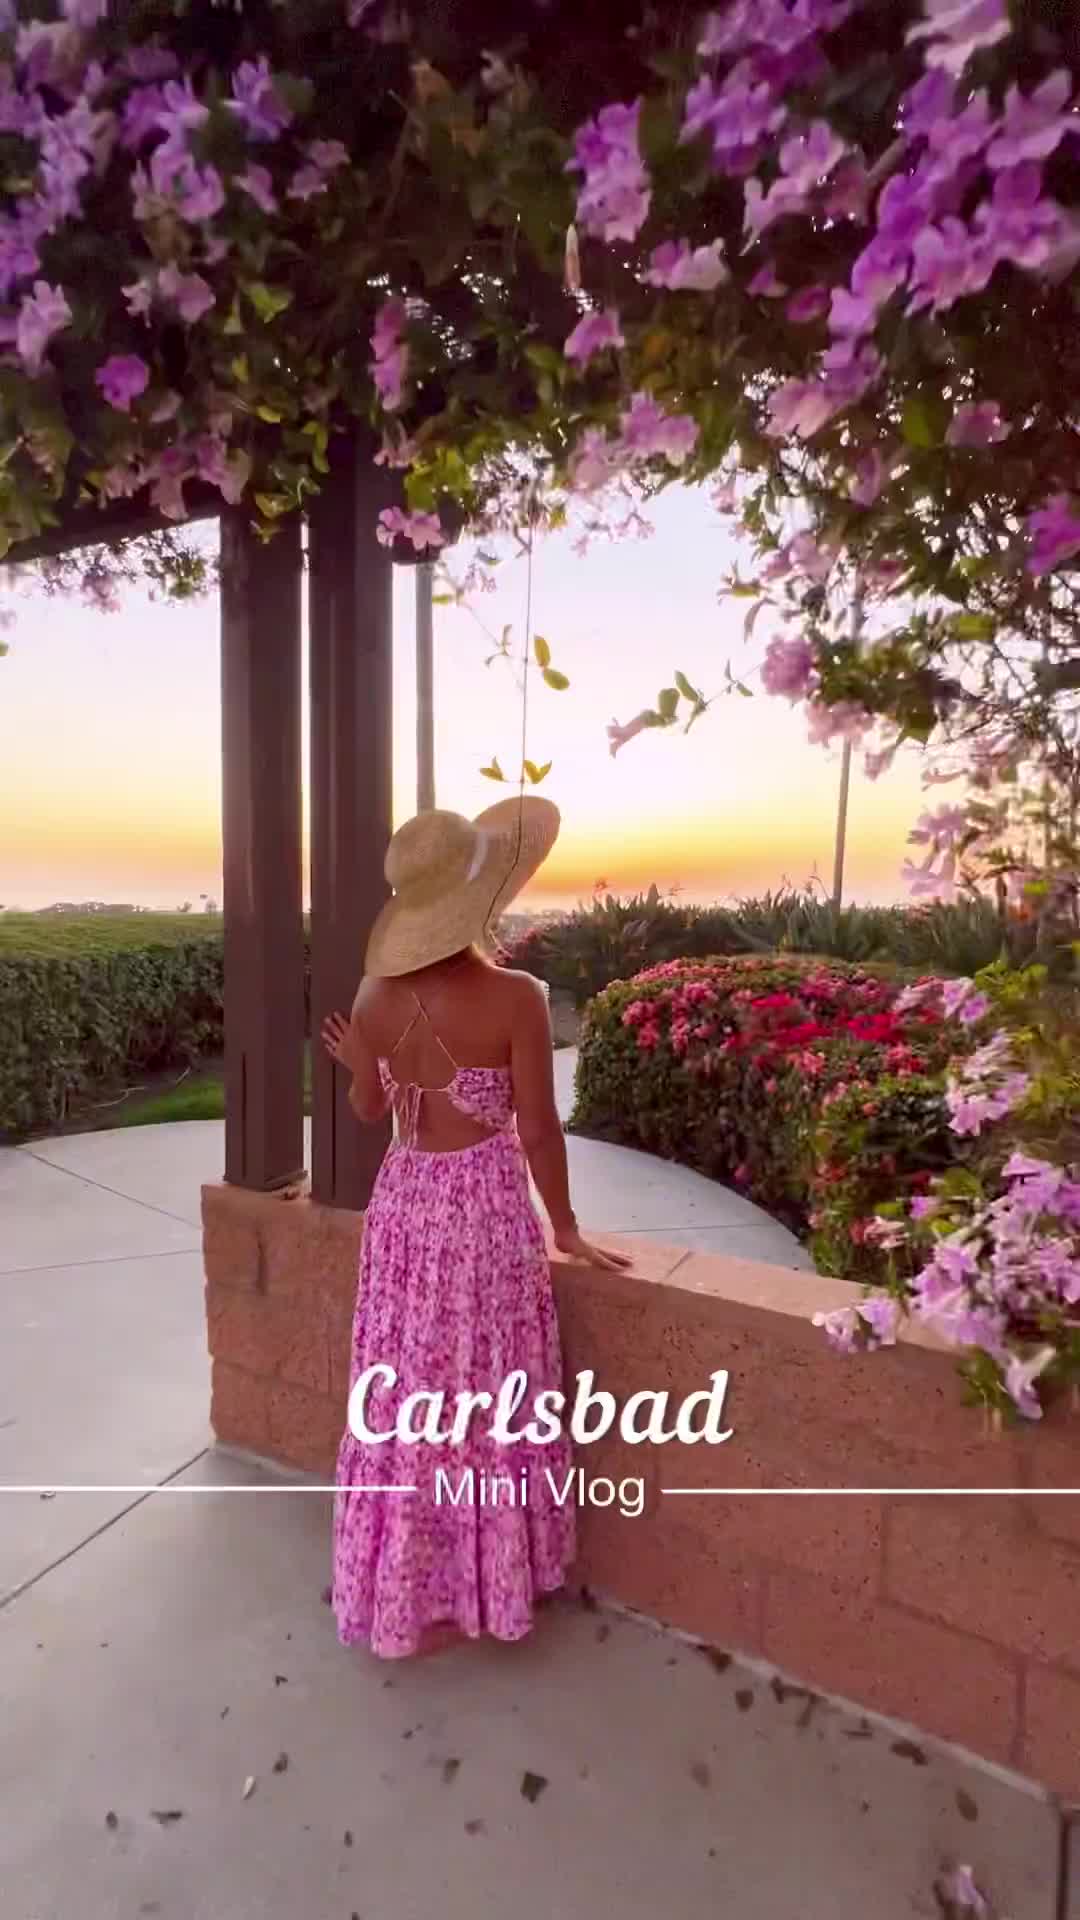 Carlsbad Weekend Guide: Top Activities & Attractions